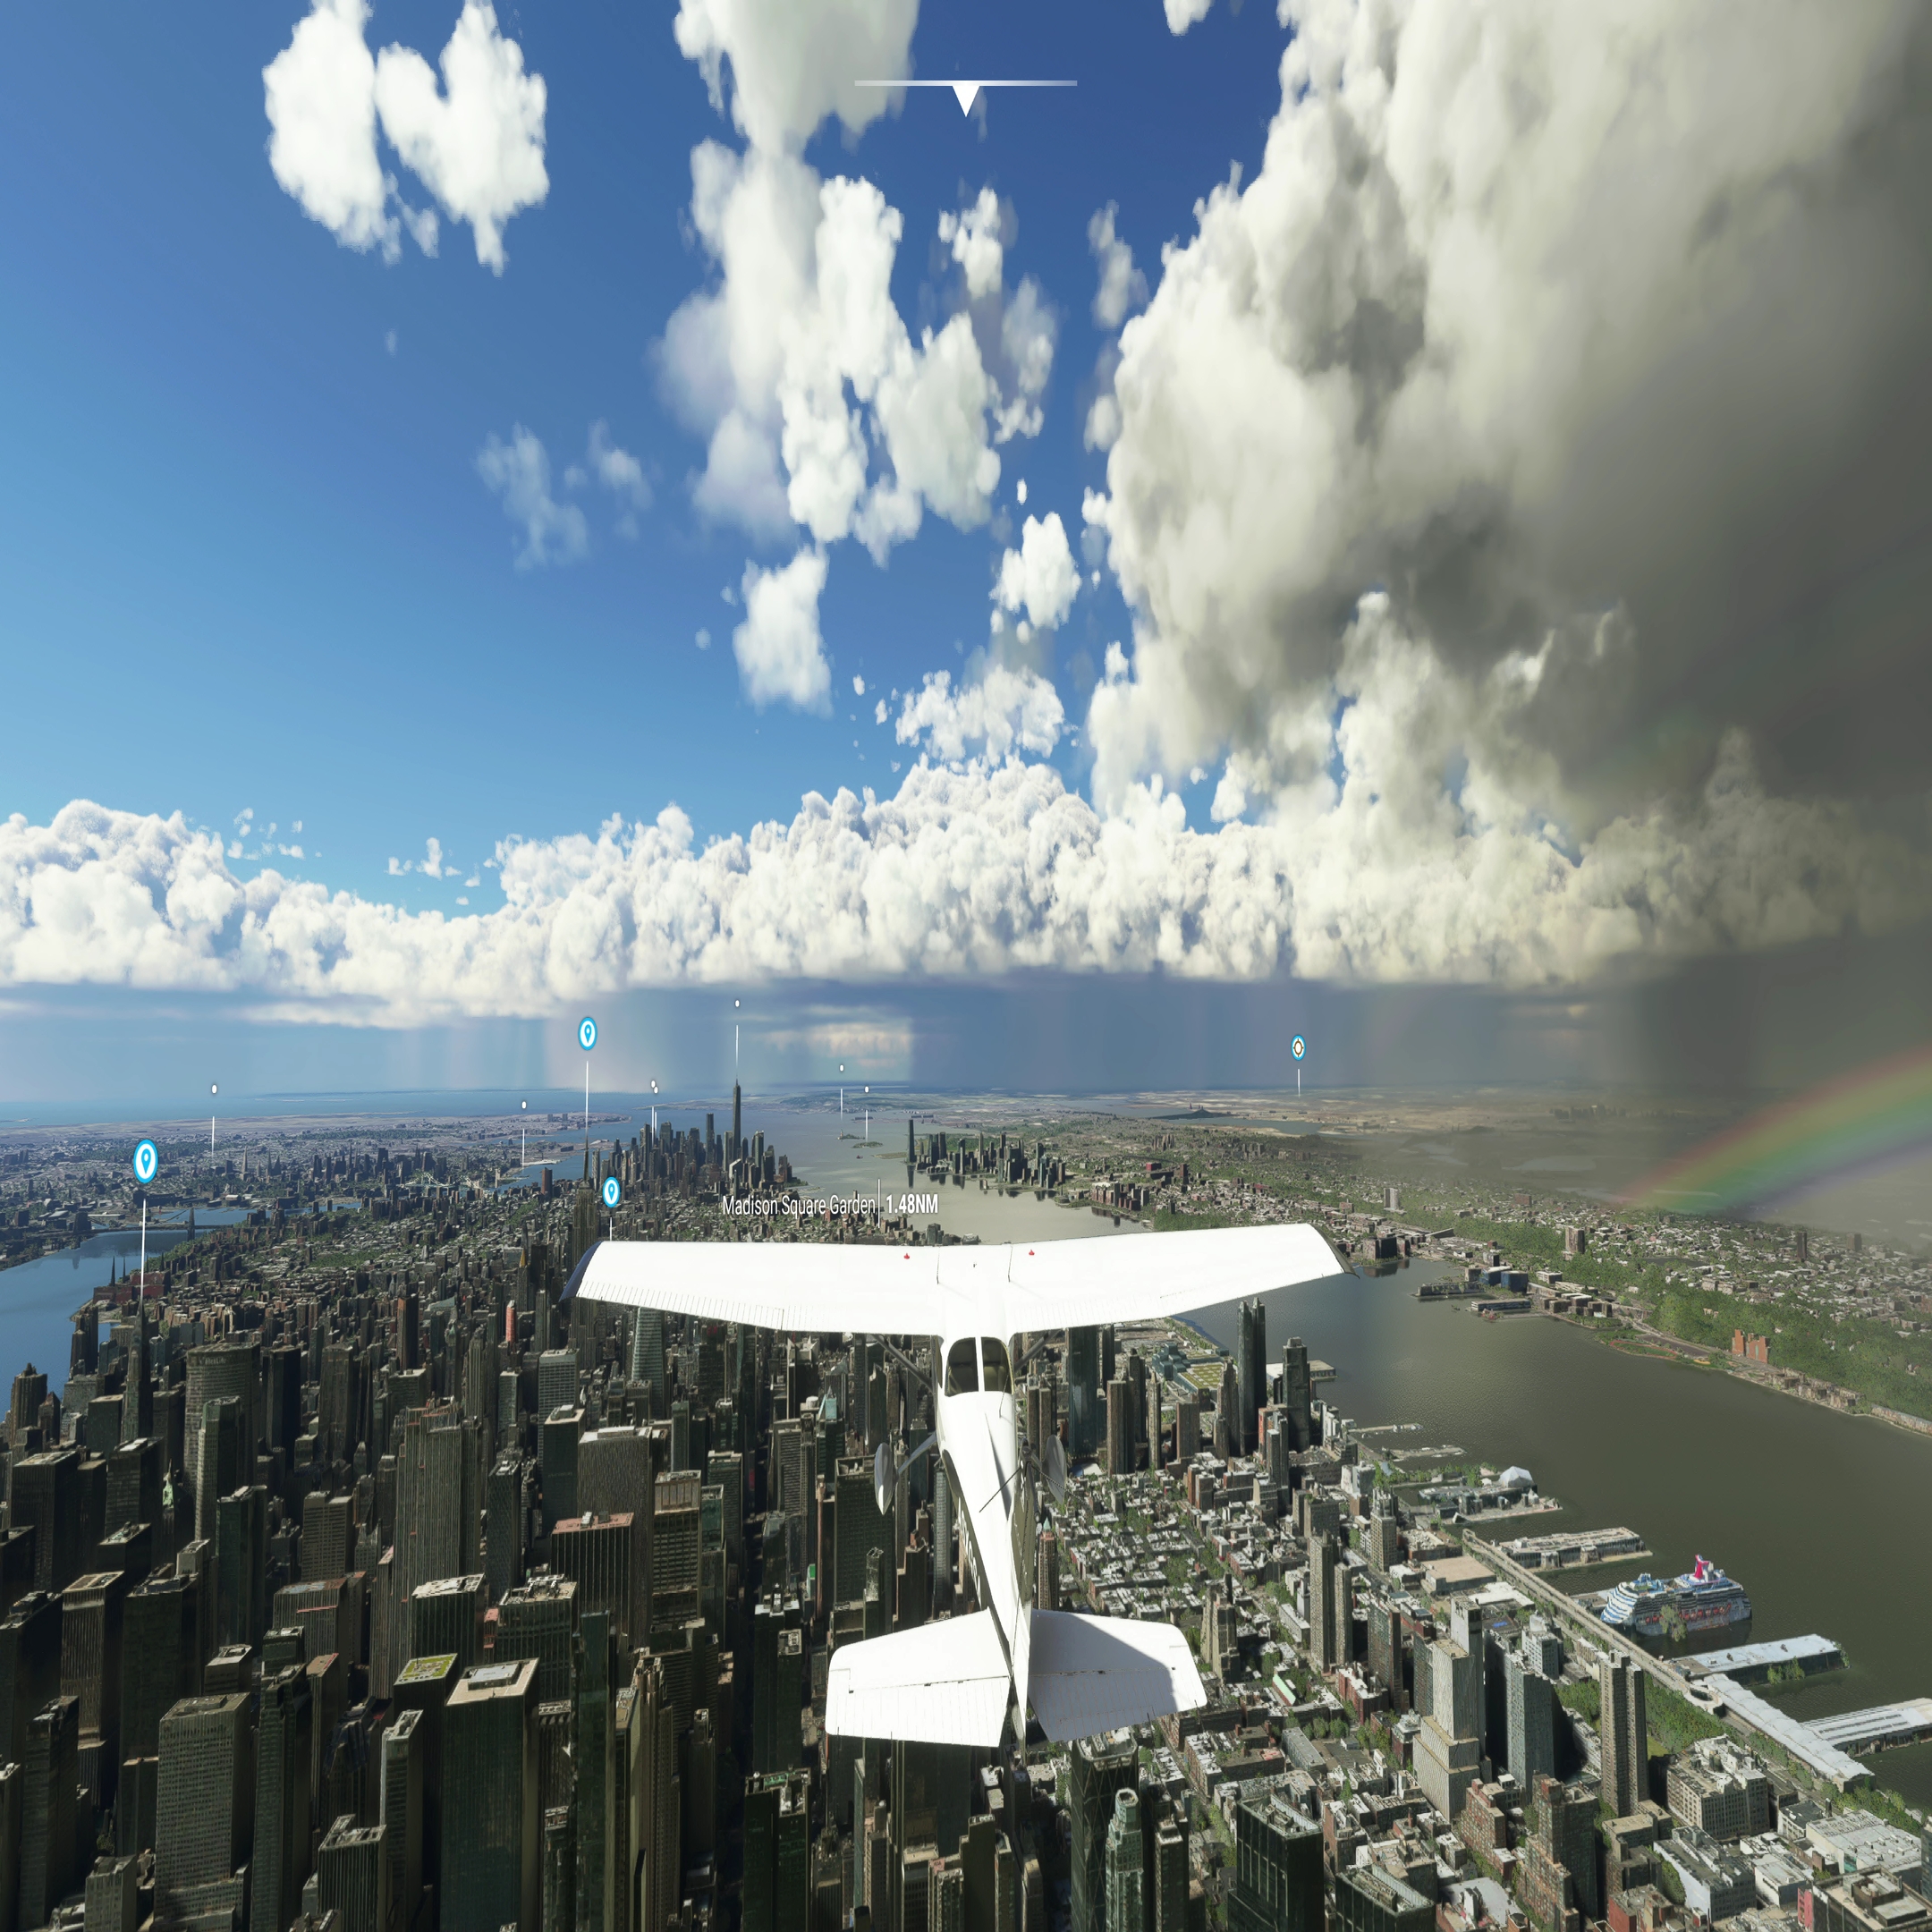 Microsoft Flight Simulator 2020, Xbox Series X [Physical